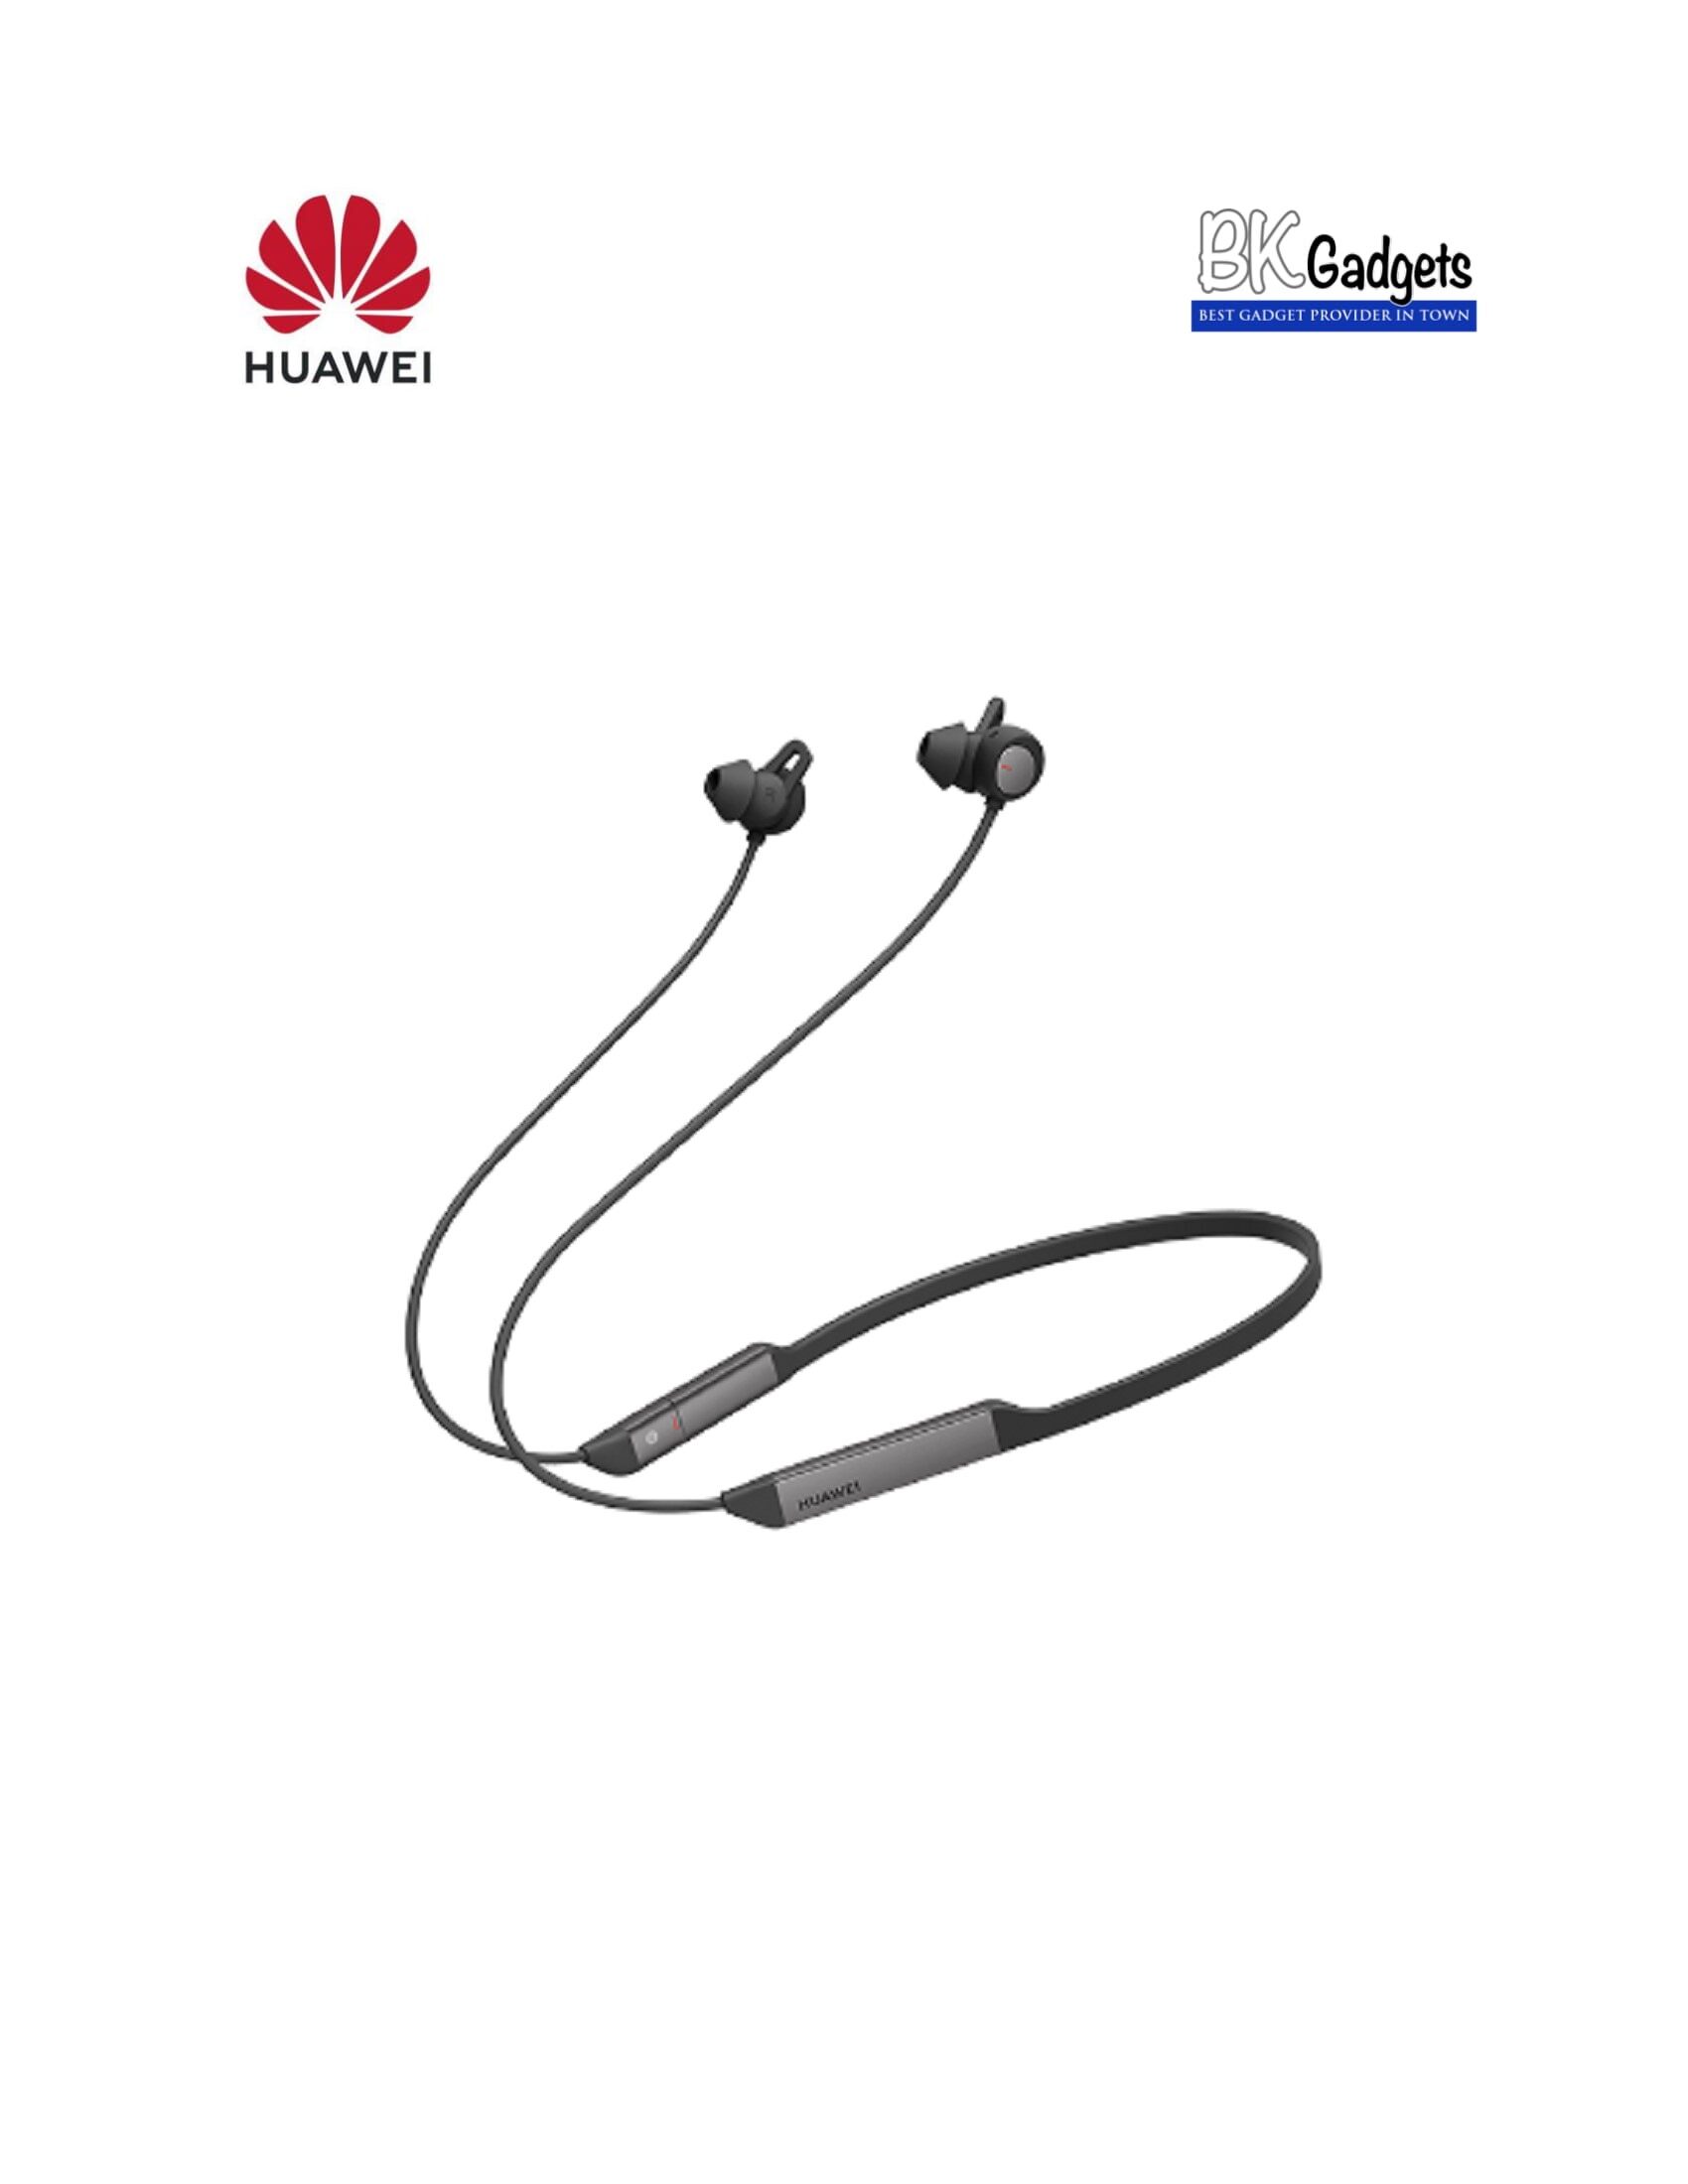 HUAWEI FREELACE PRO Bluetooth Earphone [ GRAPHITE BLACK ]